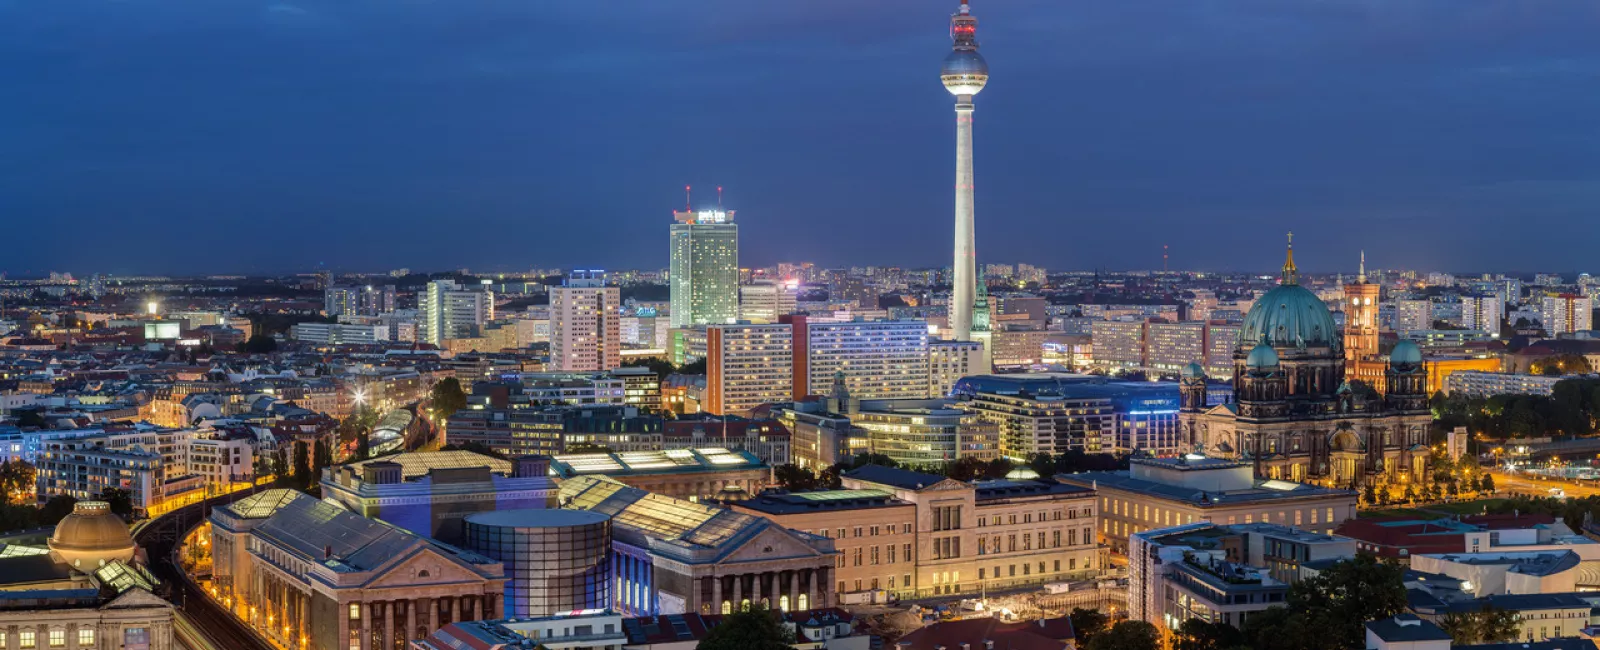 Berlin-Skyline bei Nacht